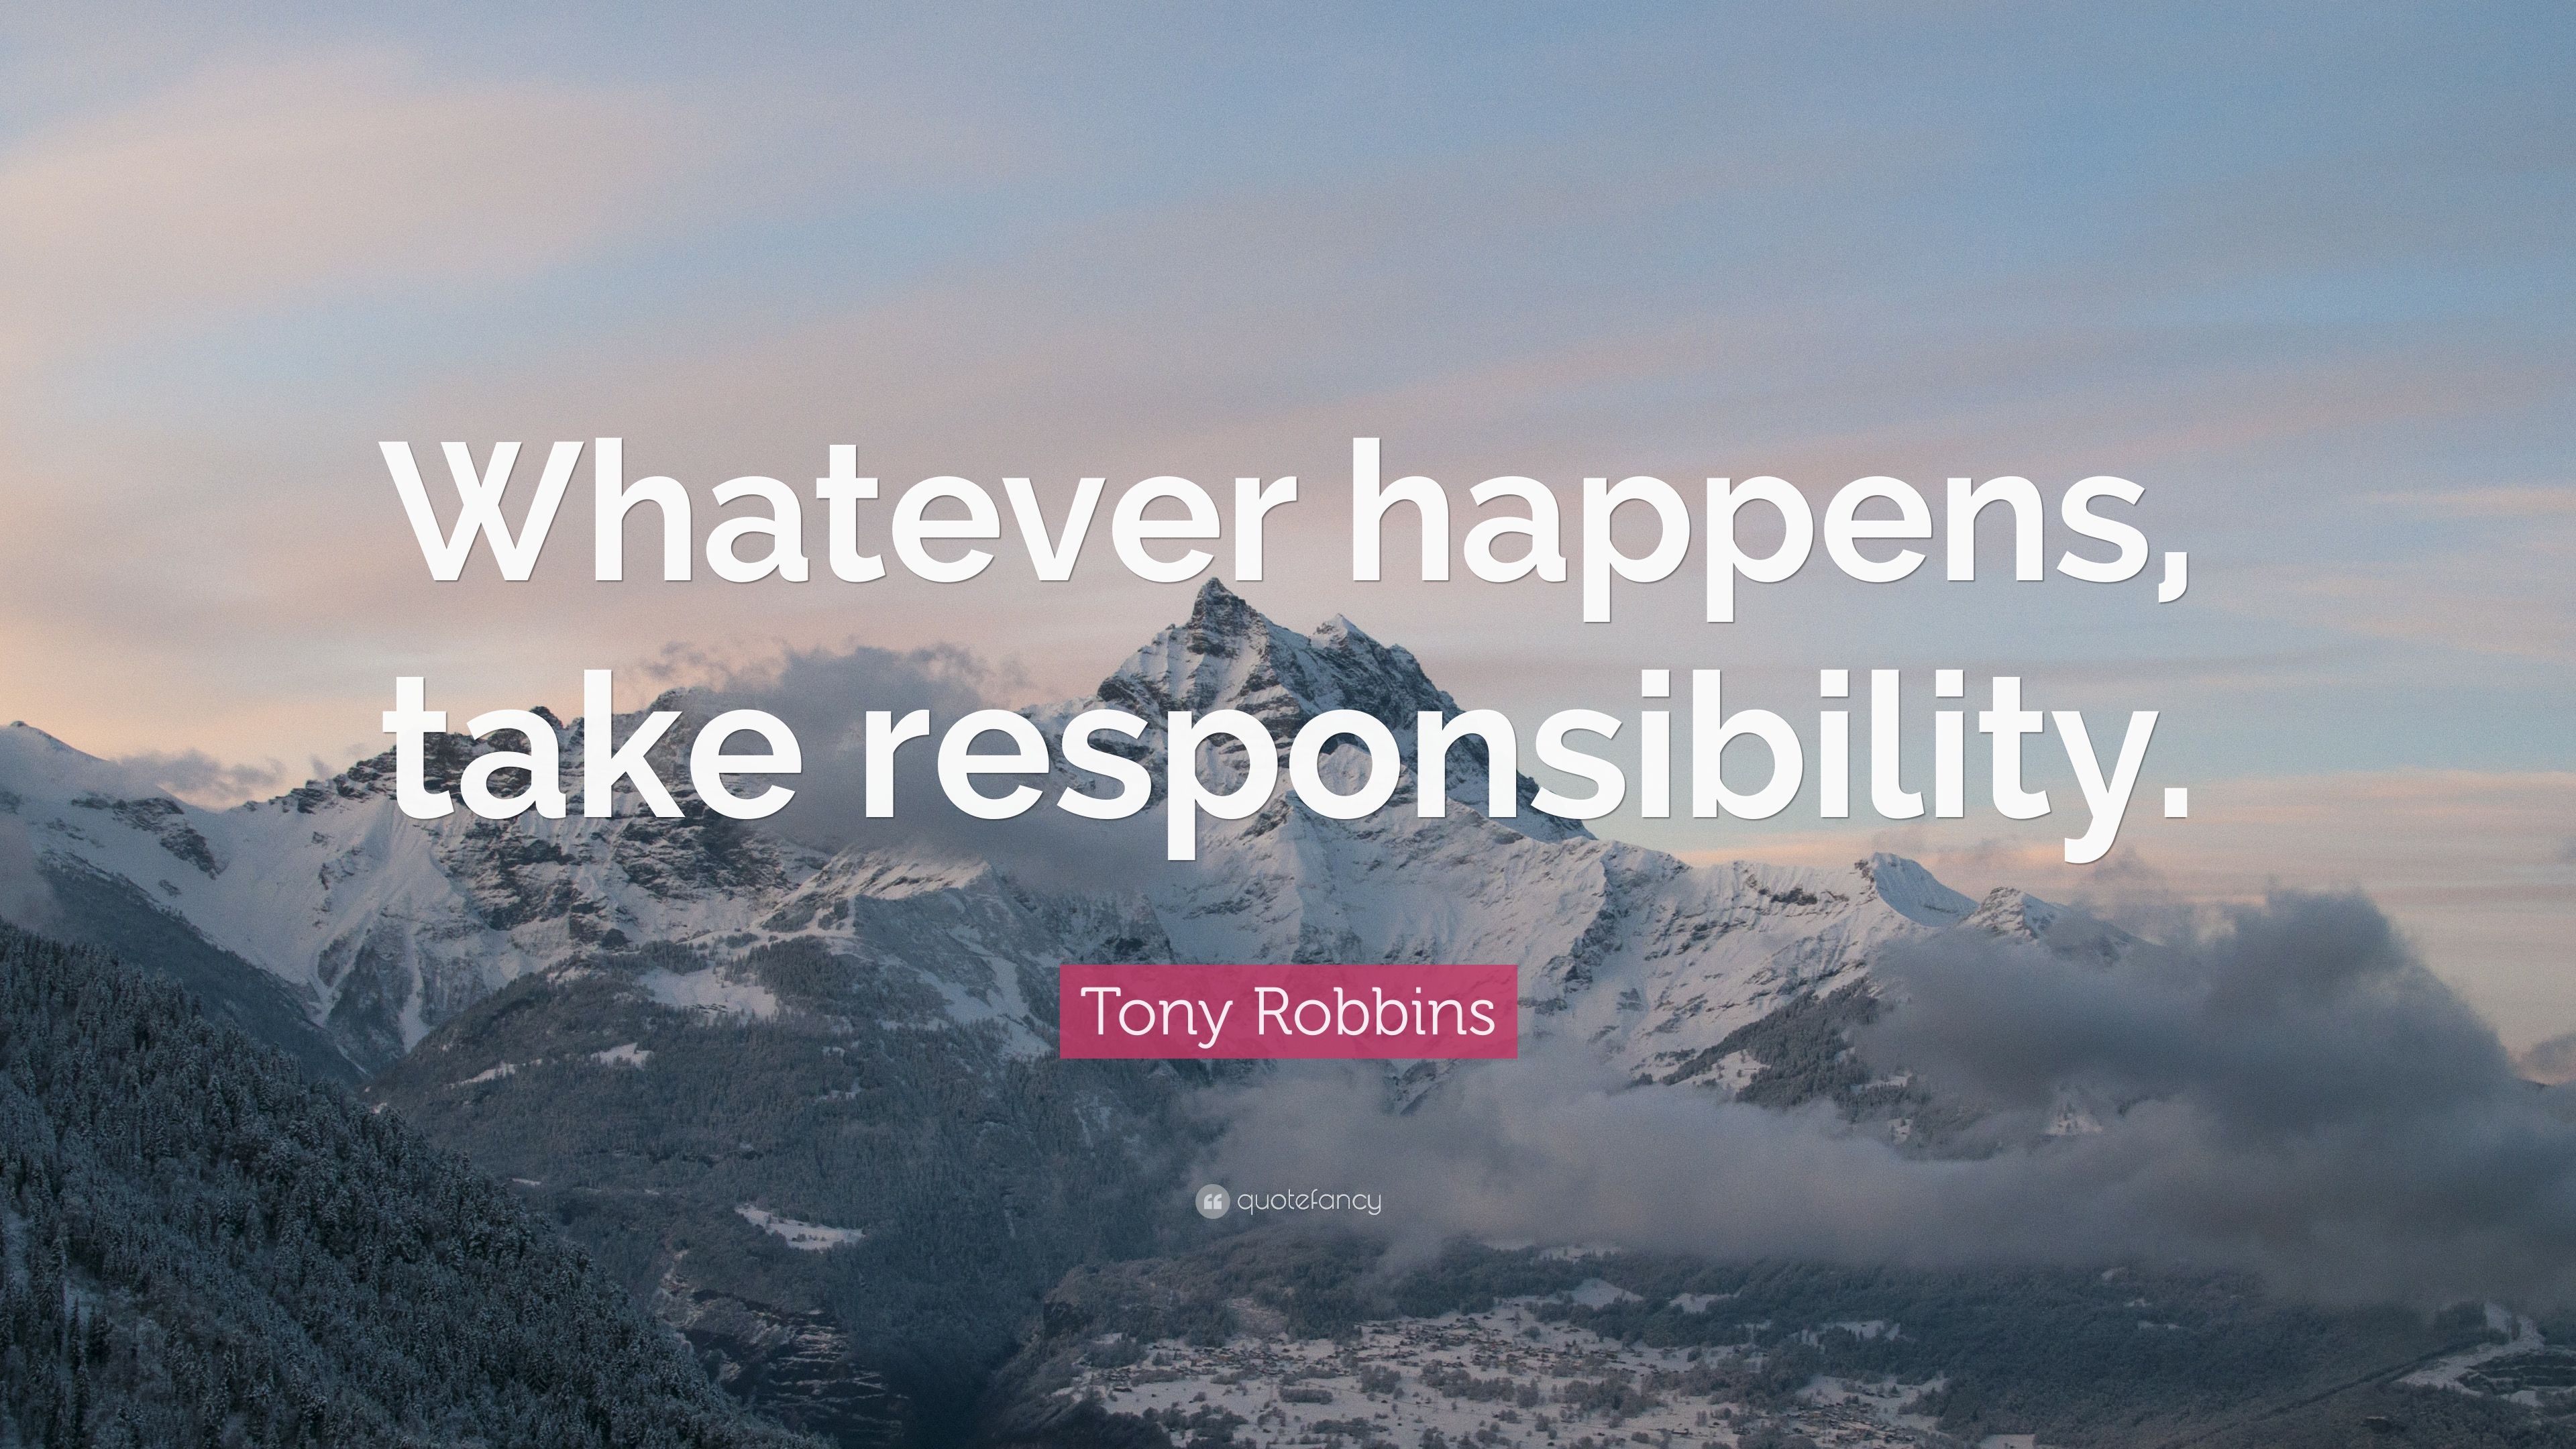 Tony Robbins Quote: “Whatever happens, take responsibility.” (12 wallpaper)